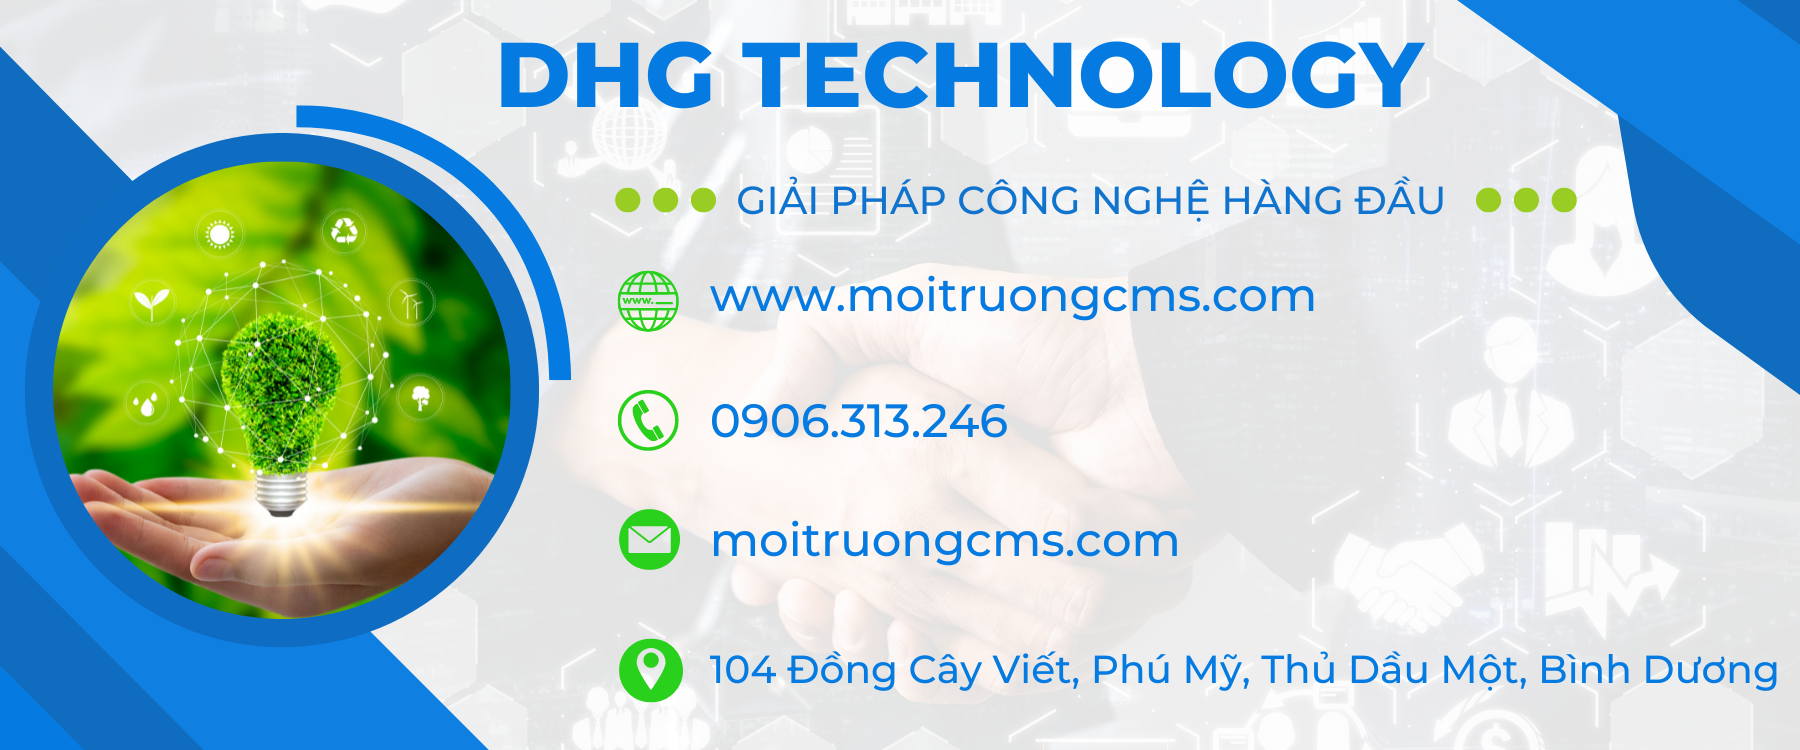 DHG Technology